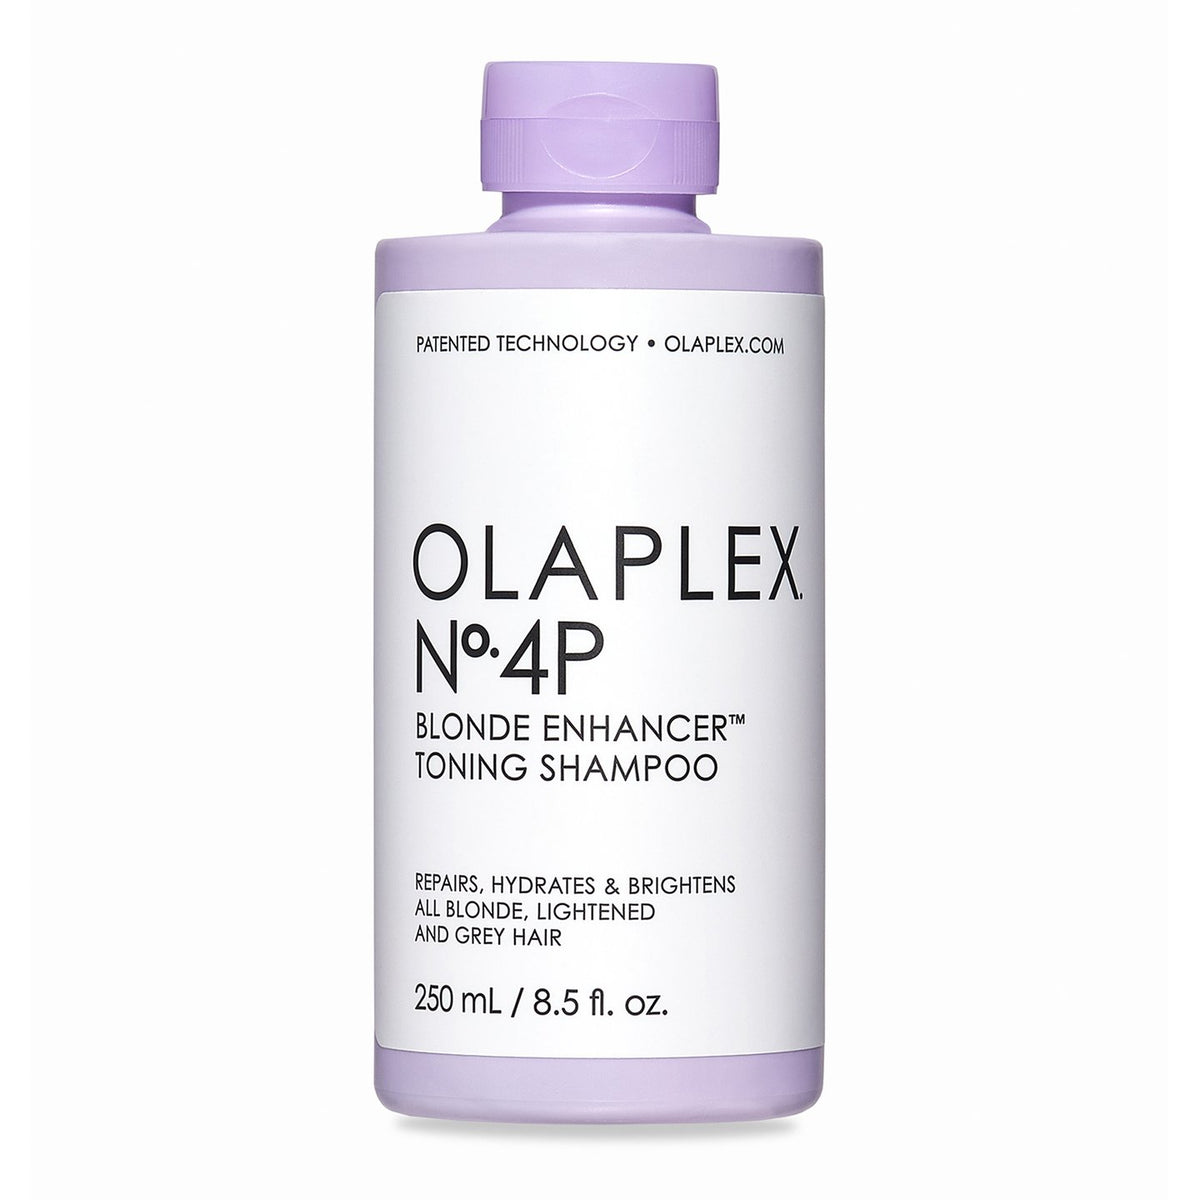 Olaplex - No.4P - Blonde Enhancer Toning Shampoo |8.5 oz| - by Olaplex |ProCare Outlet|